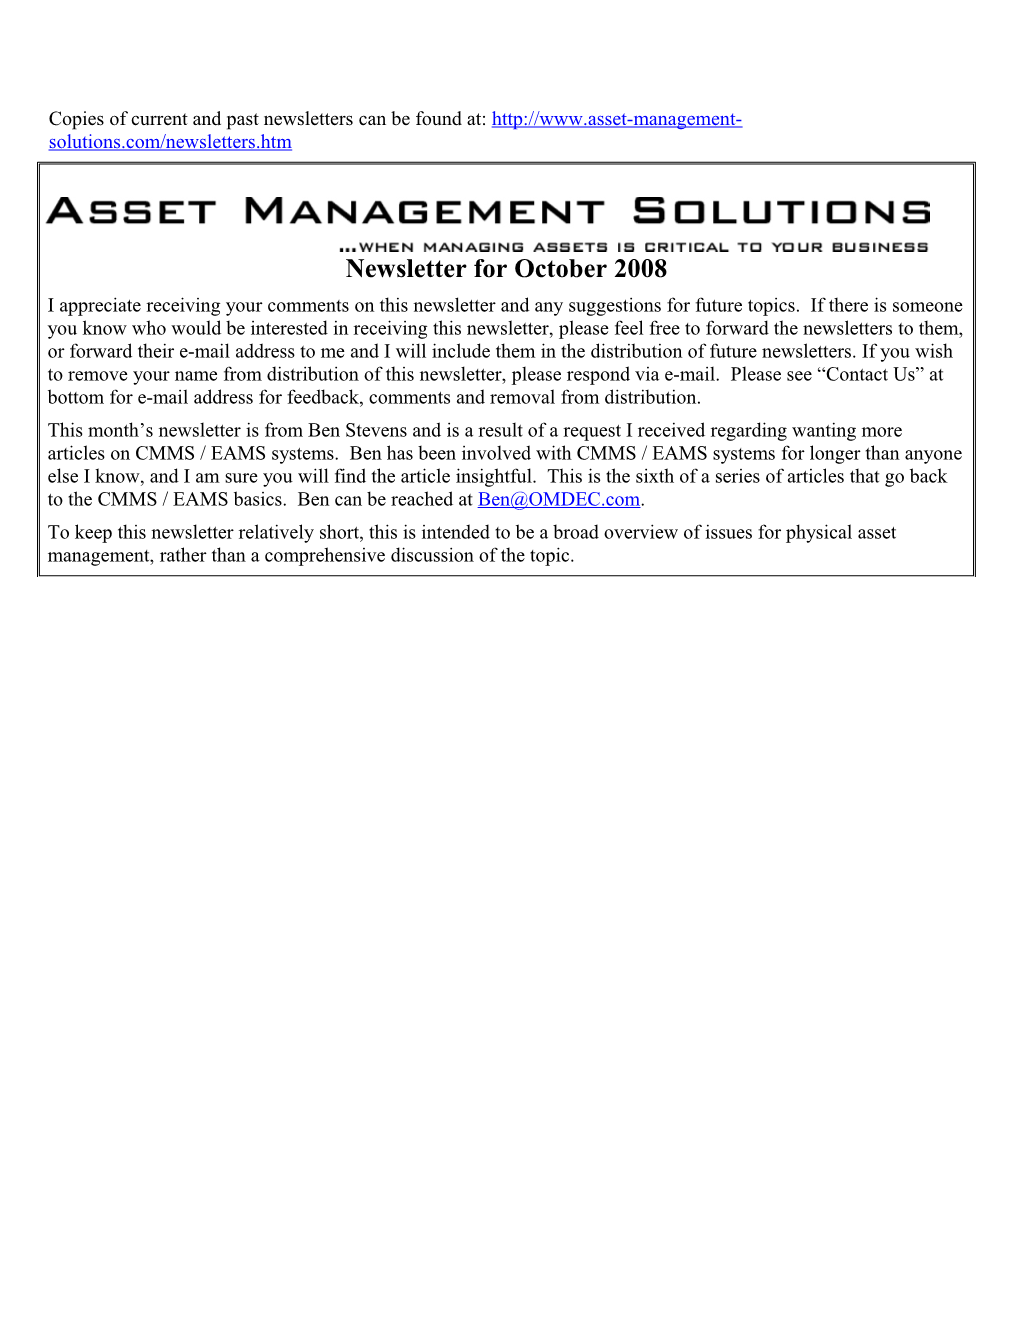 Asset Management Solutions Newsletter for October 2008